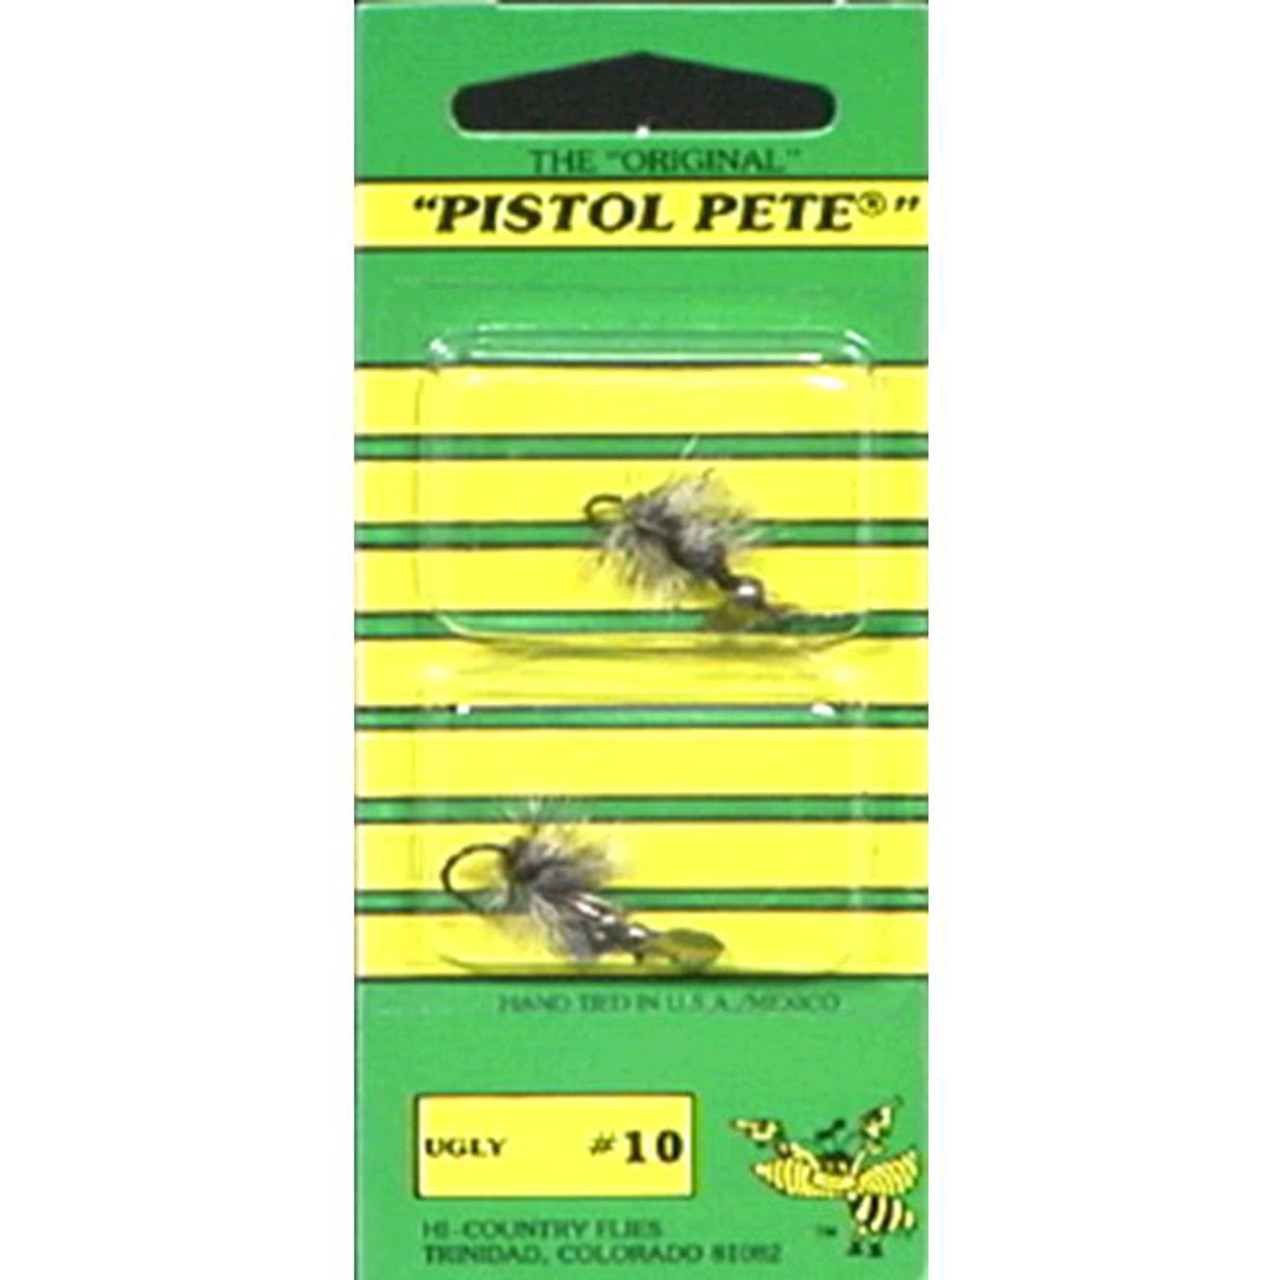 Pistol Pete - Hi-Country Flies Pistol Pete Size 10 - Ugly